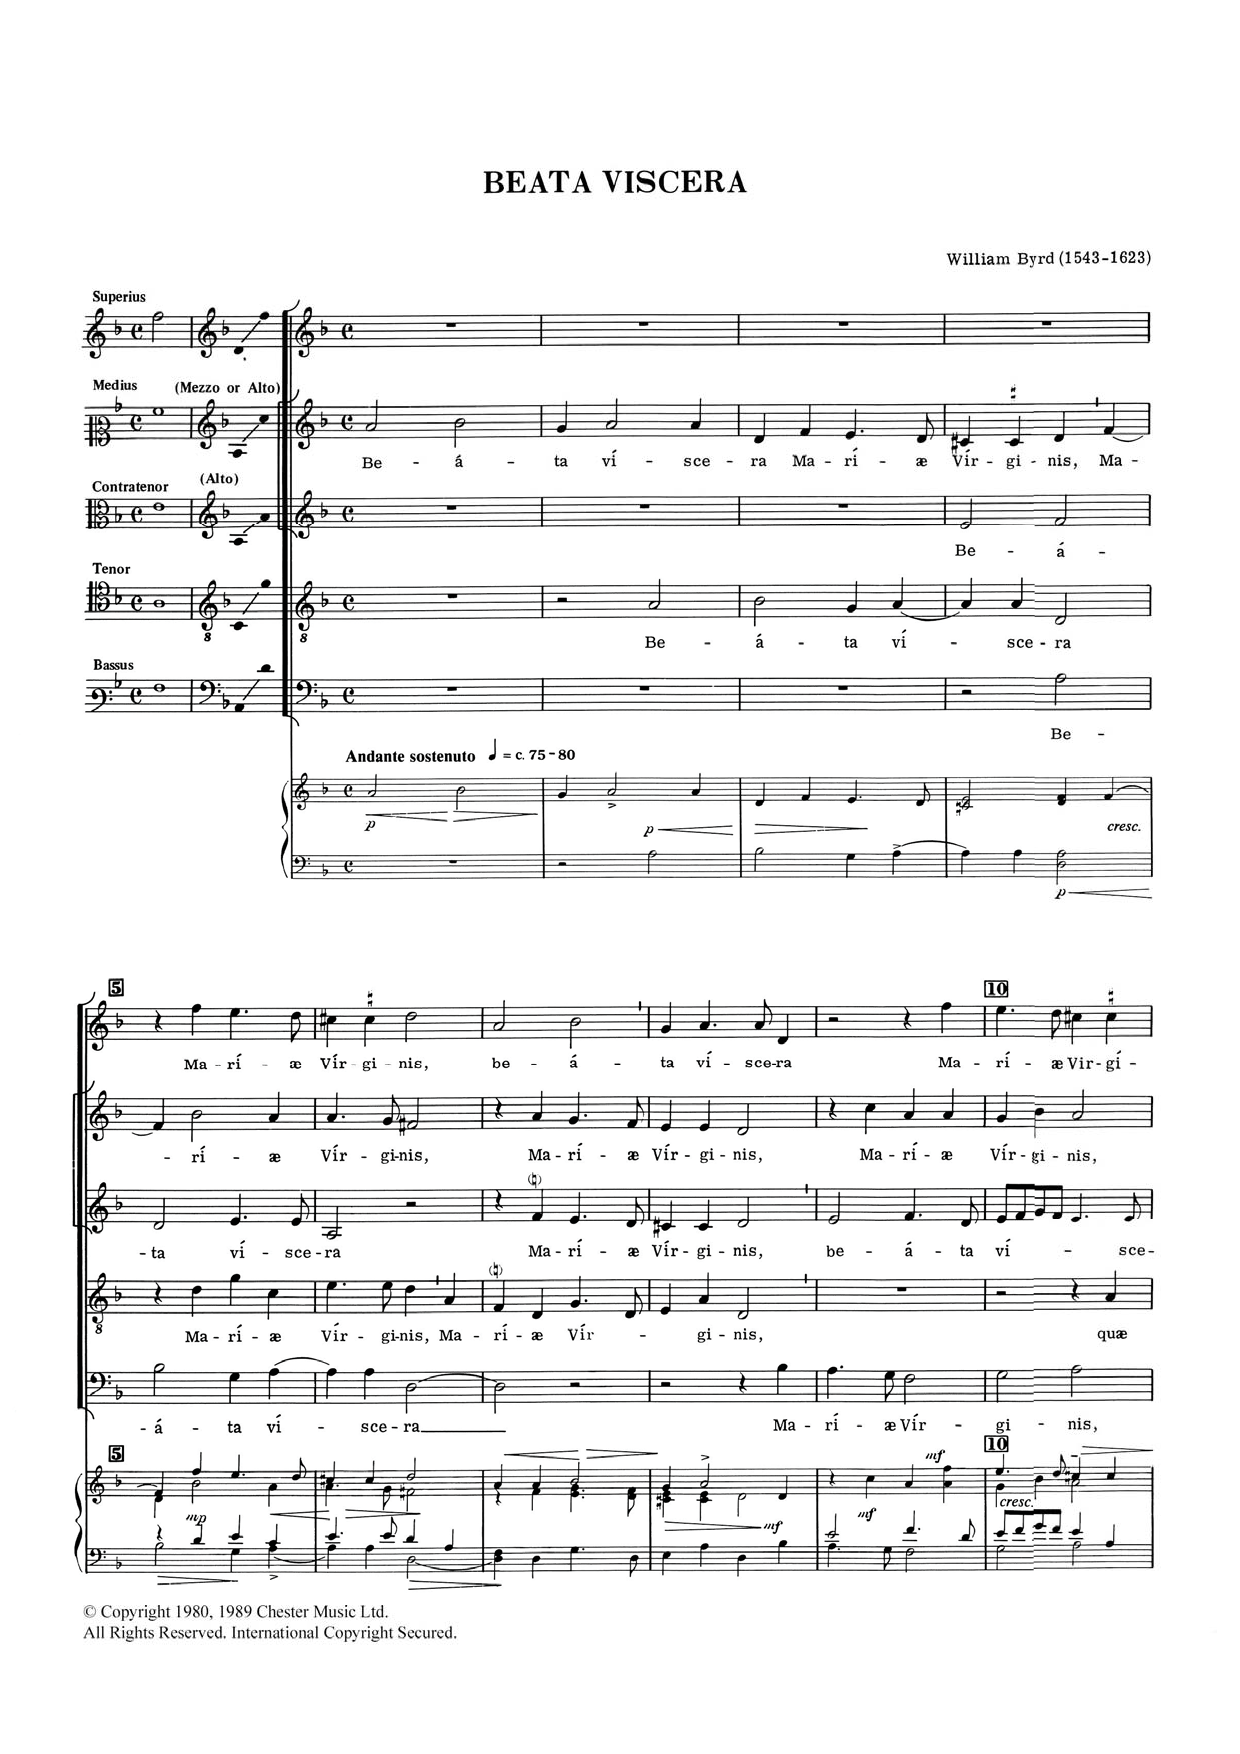 William Byrd Beata Viscera Sheet Music Notes & Chords for Choral SAATB - Download or Print PDF